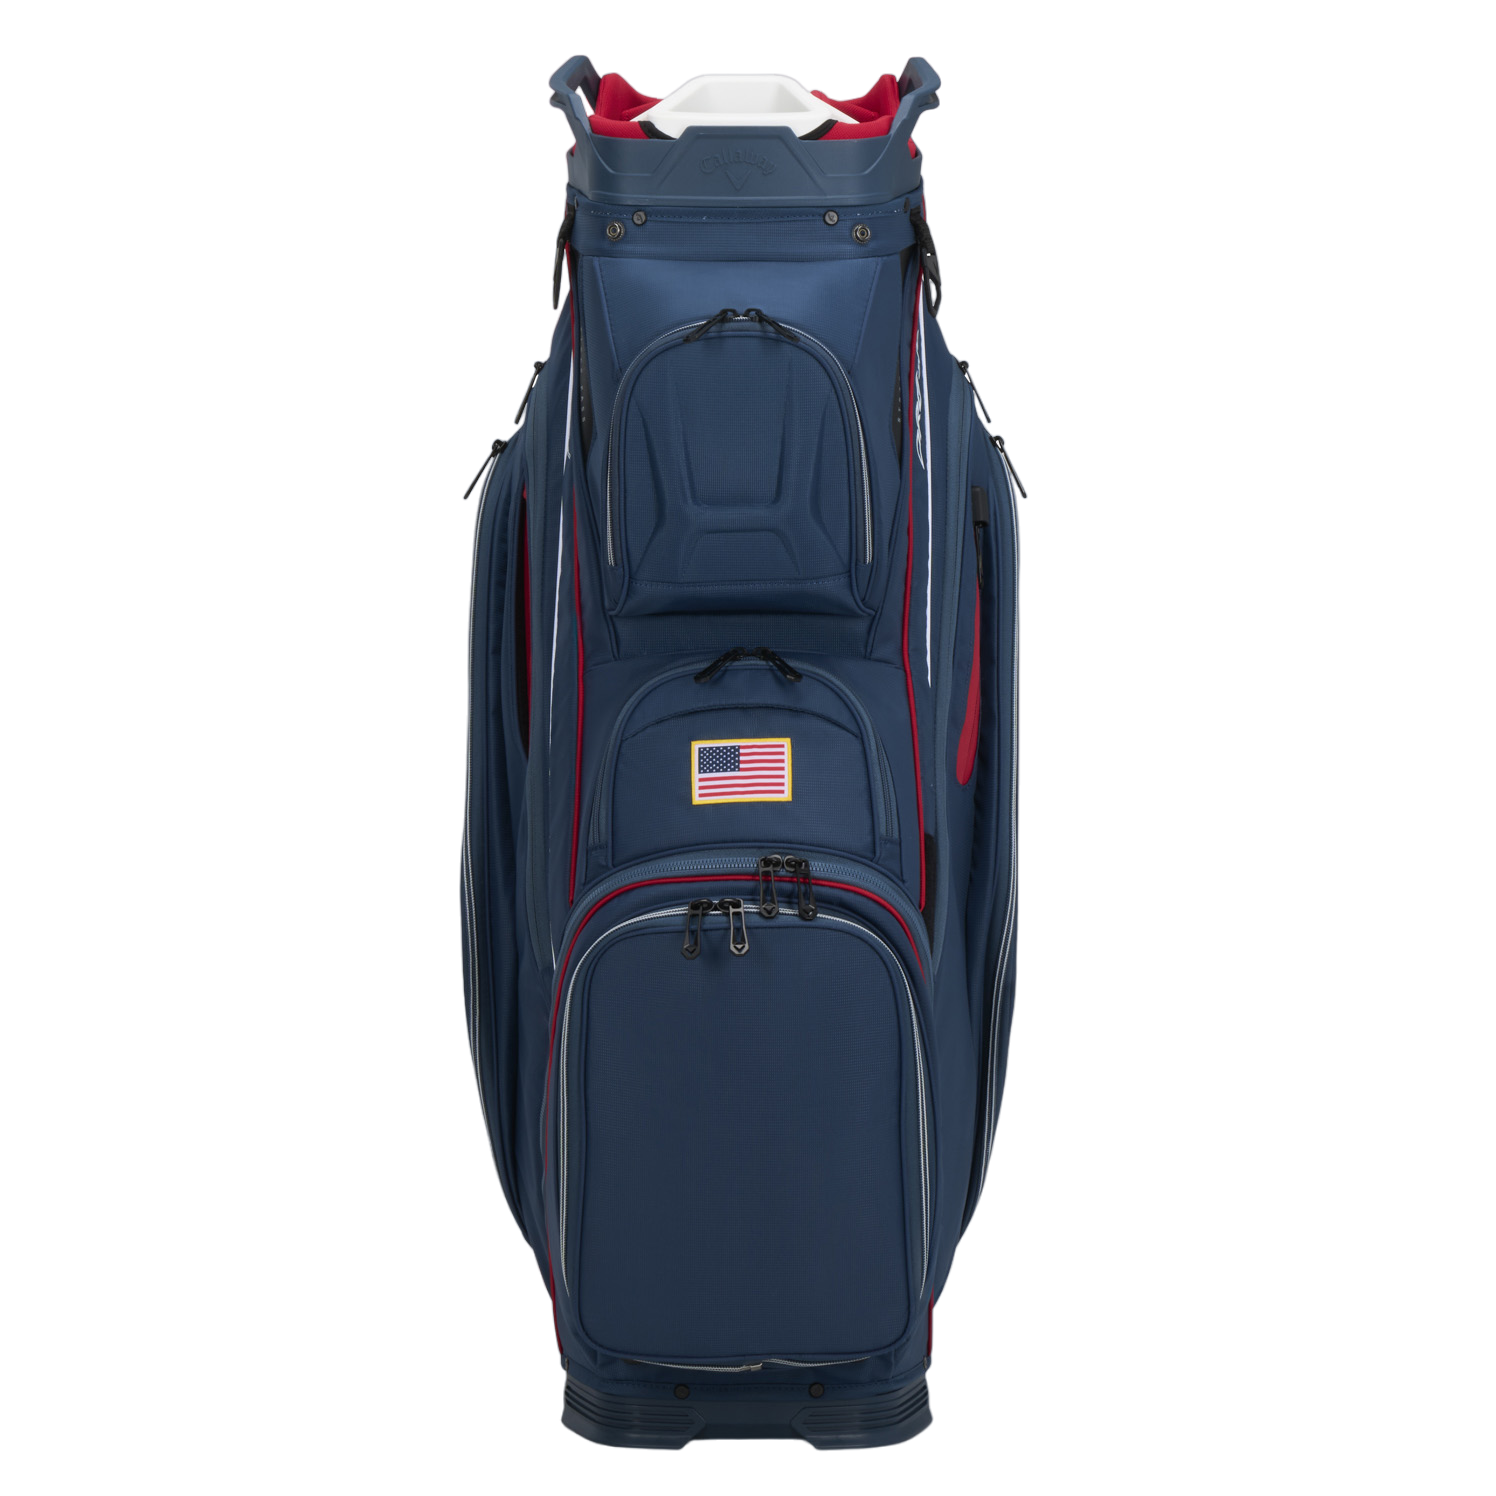 ORG 14 2023 Cart Bag